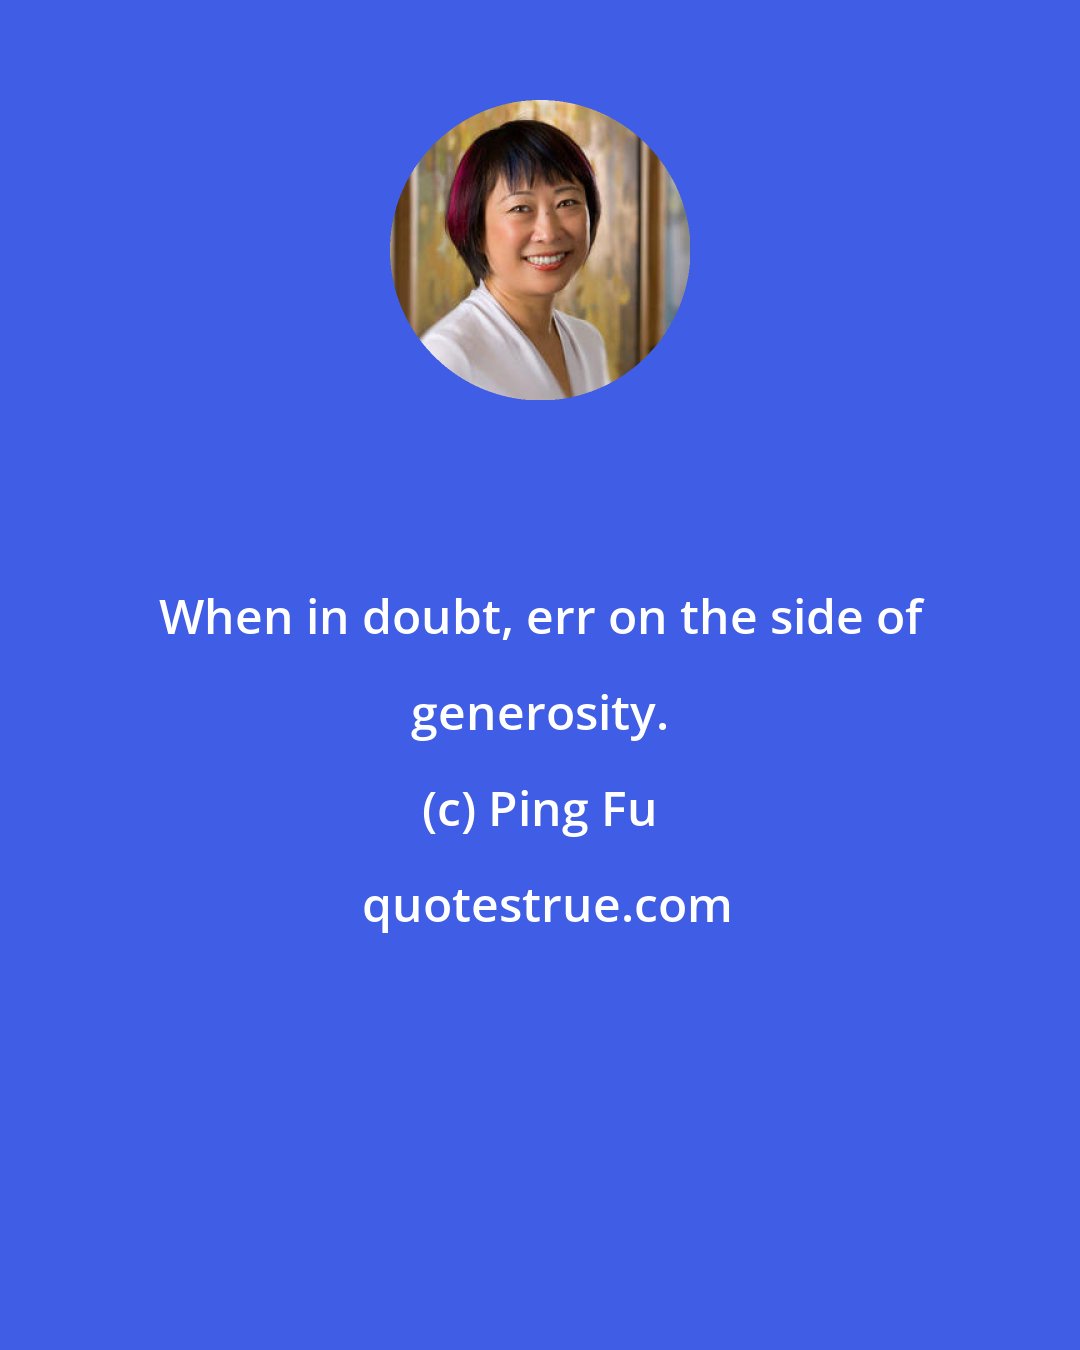 Ping Fu: When in doubt, err on the side of generosity.